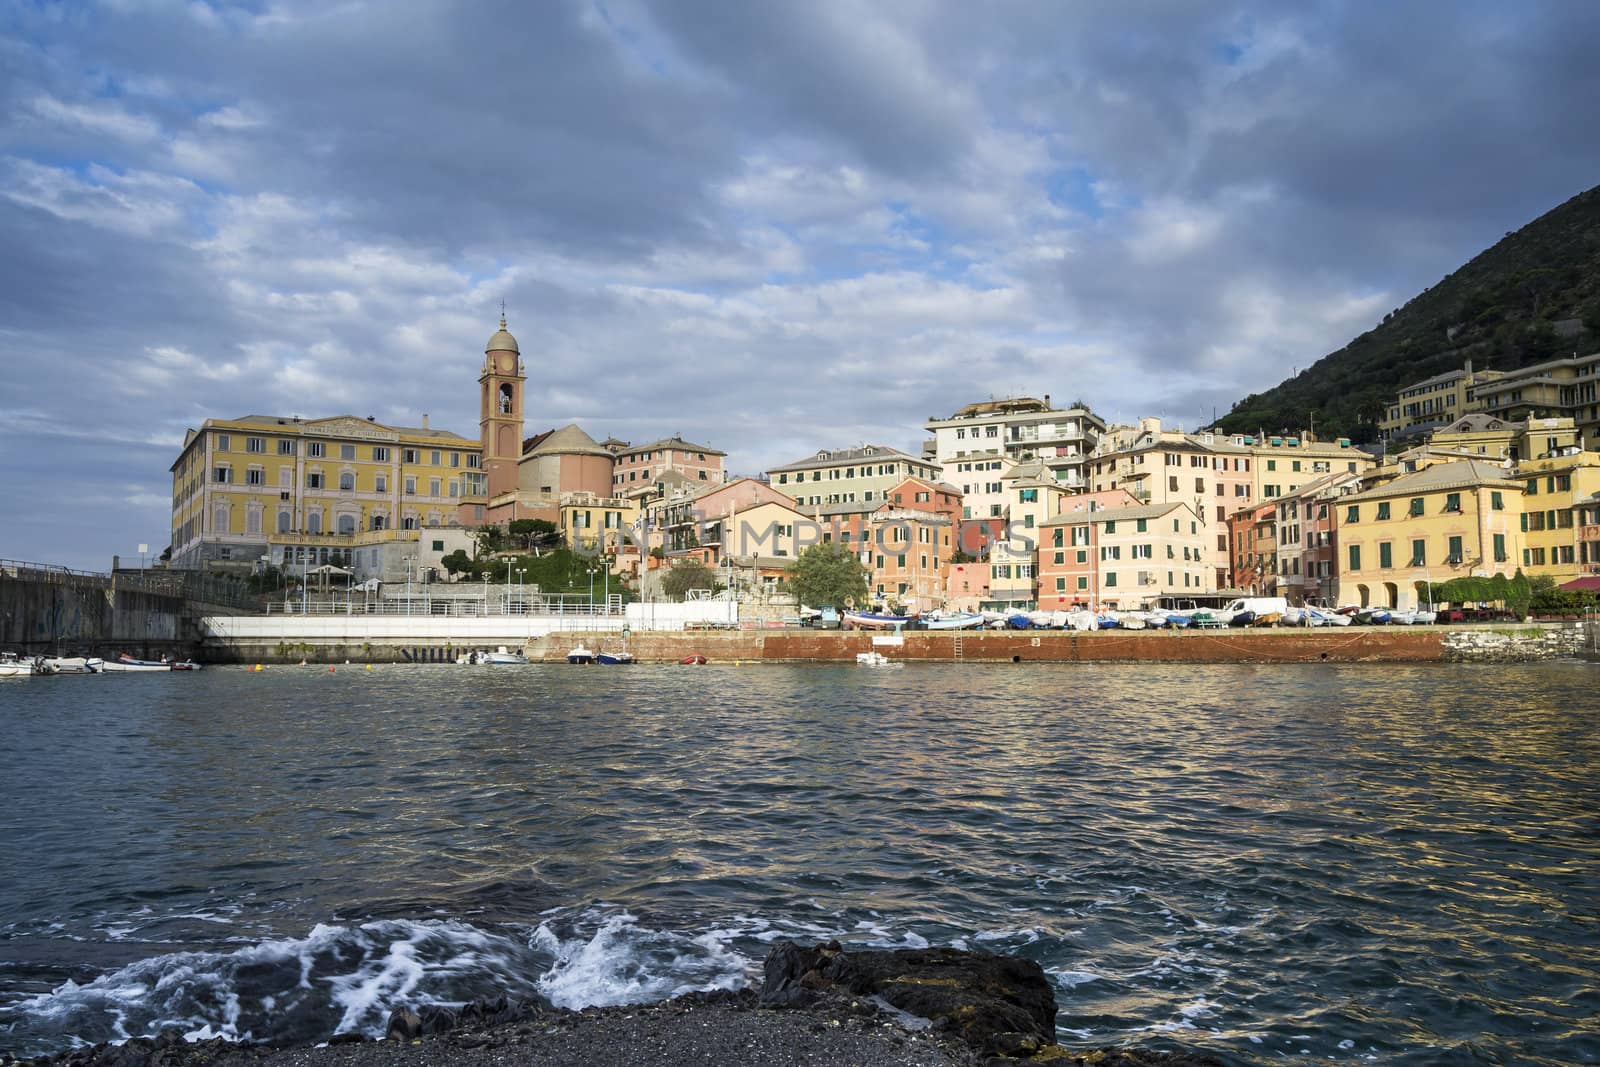 beautiful small town with a small harbor near Genova, Italy by avalon1973